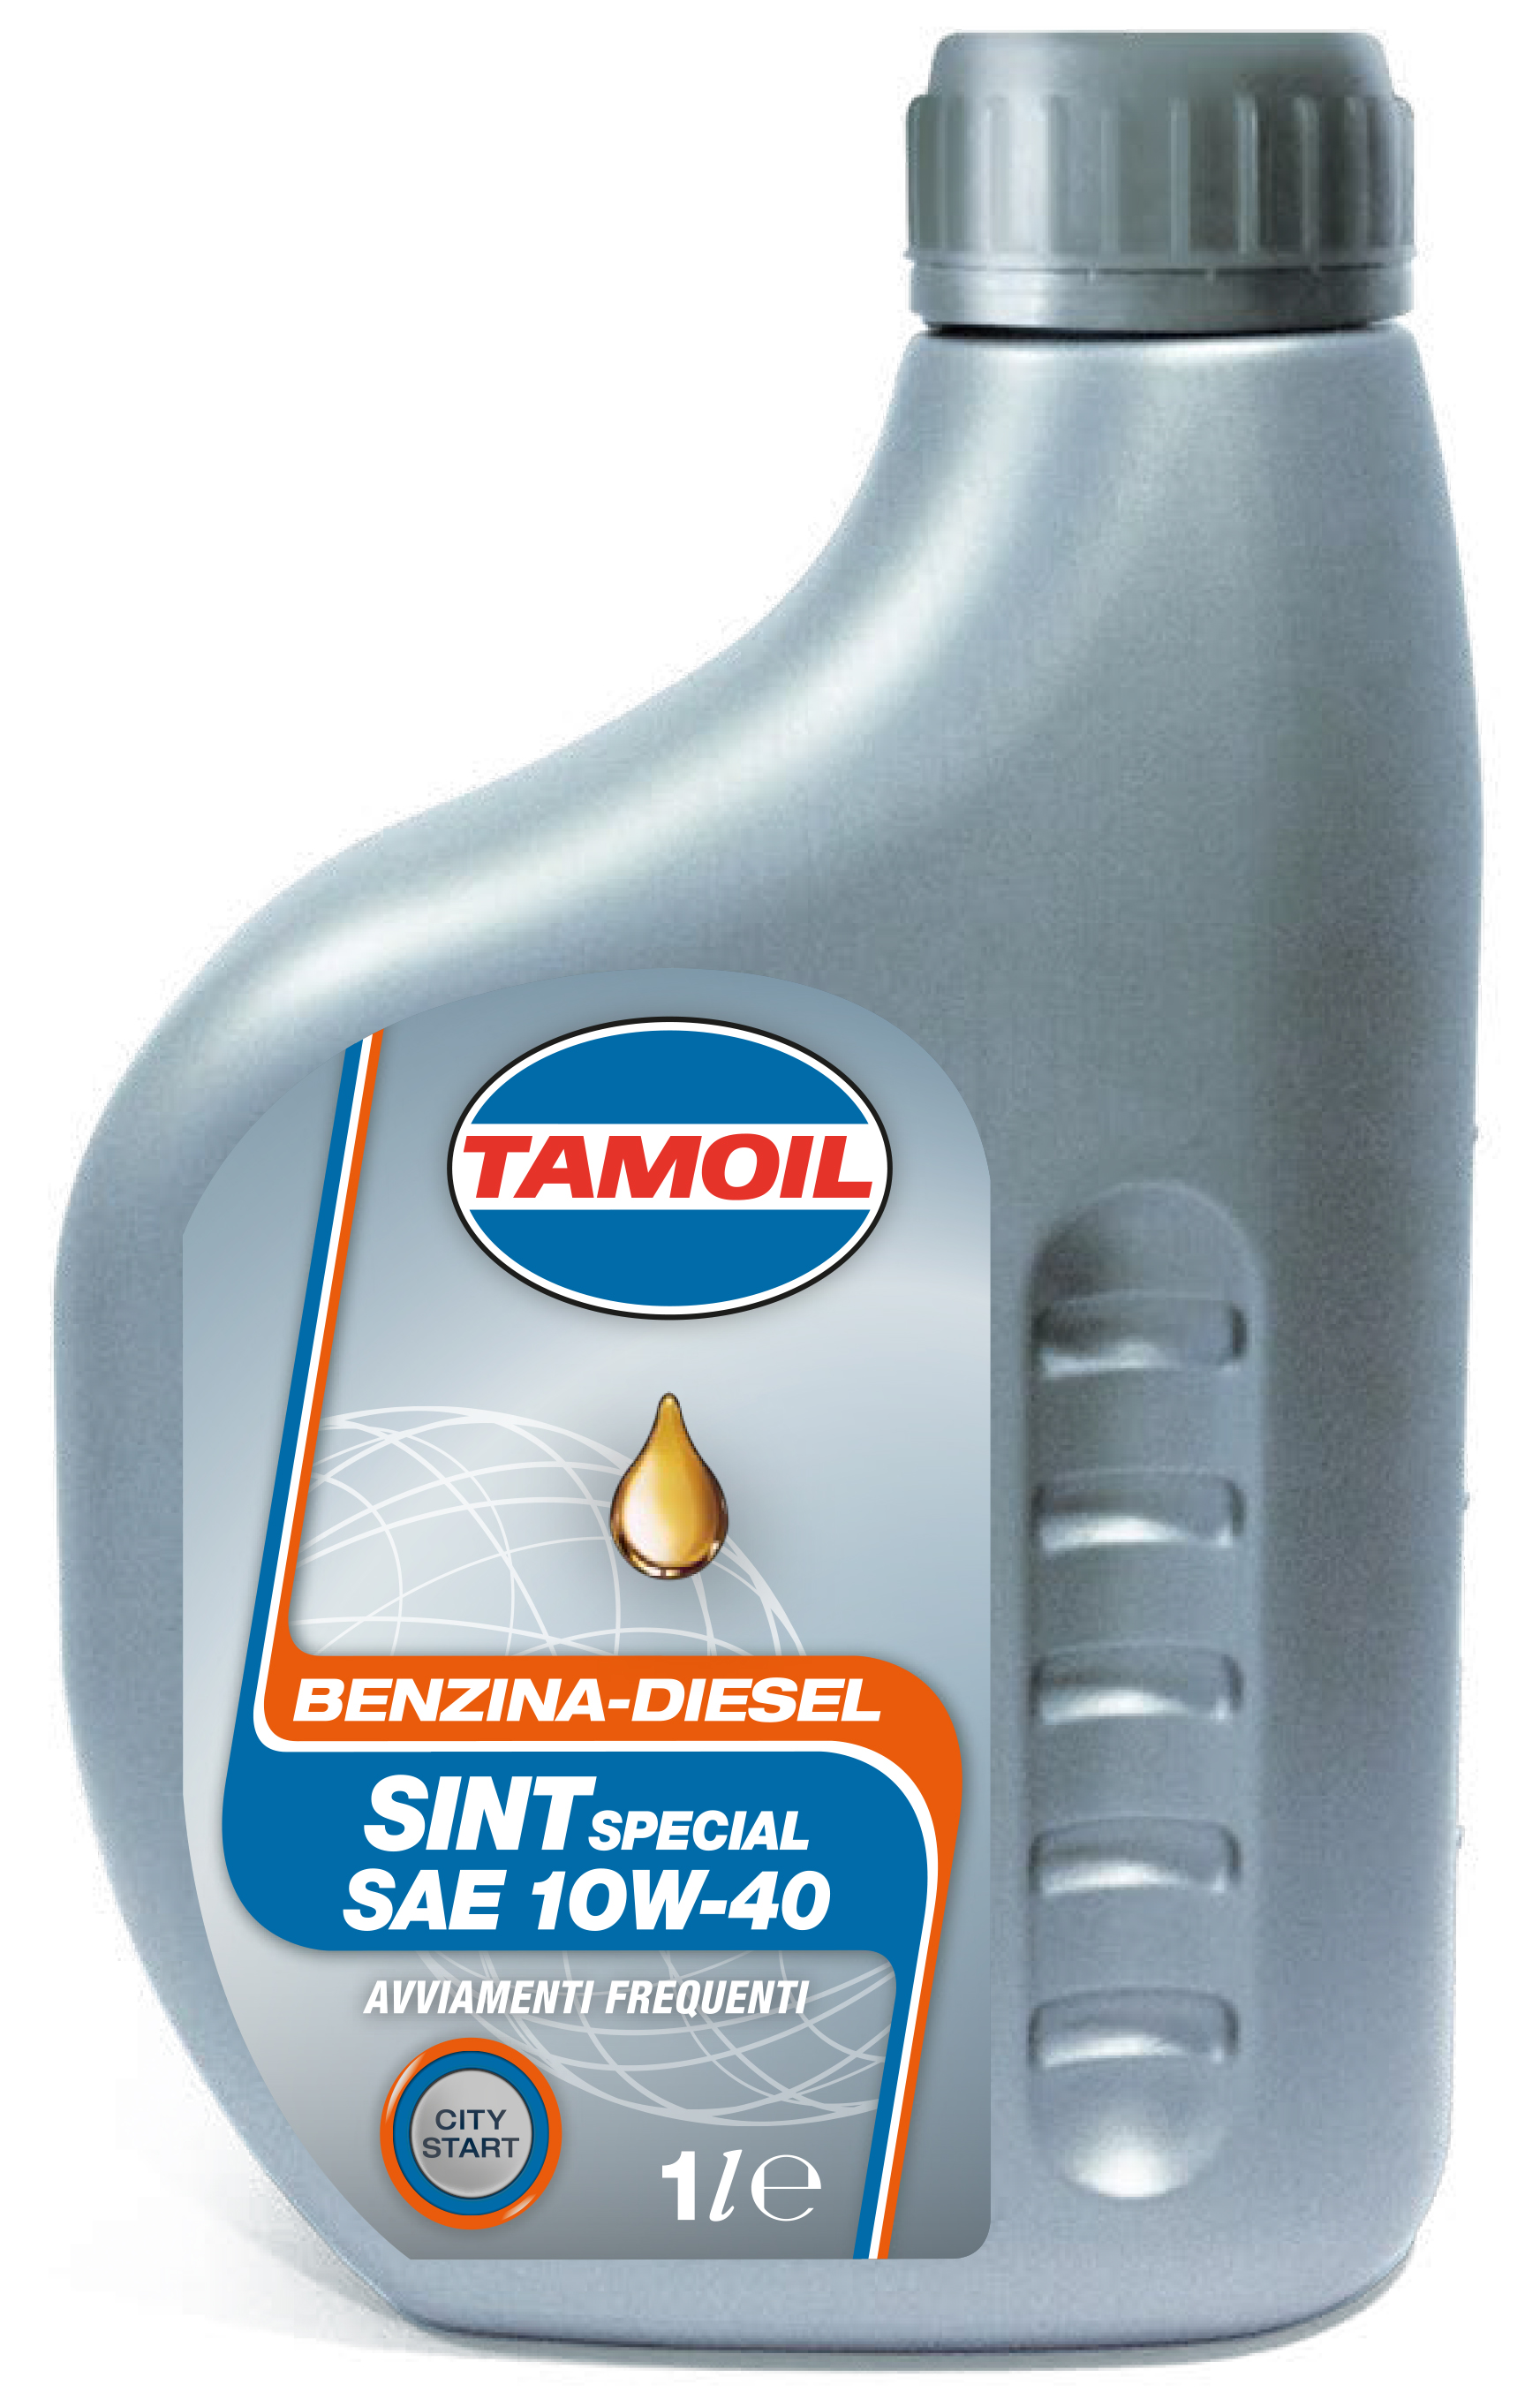 Tamoil City Start SAE 10W-40 B/D olio per motore 1 L Auto: prezzi